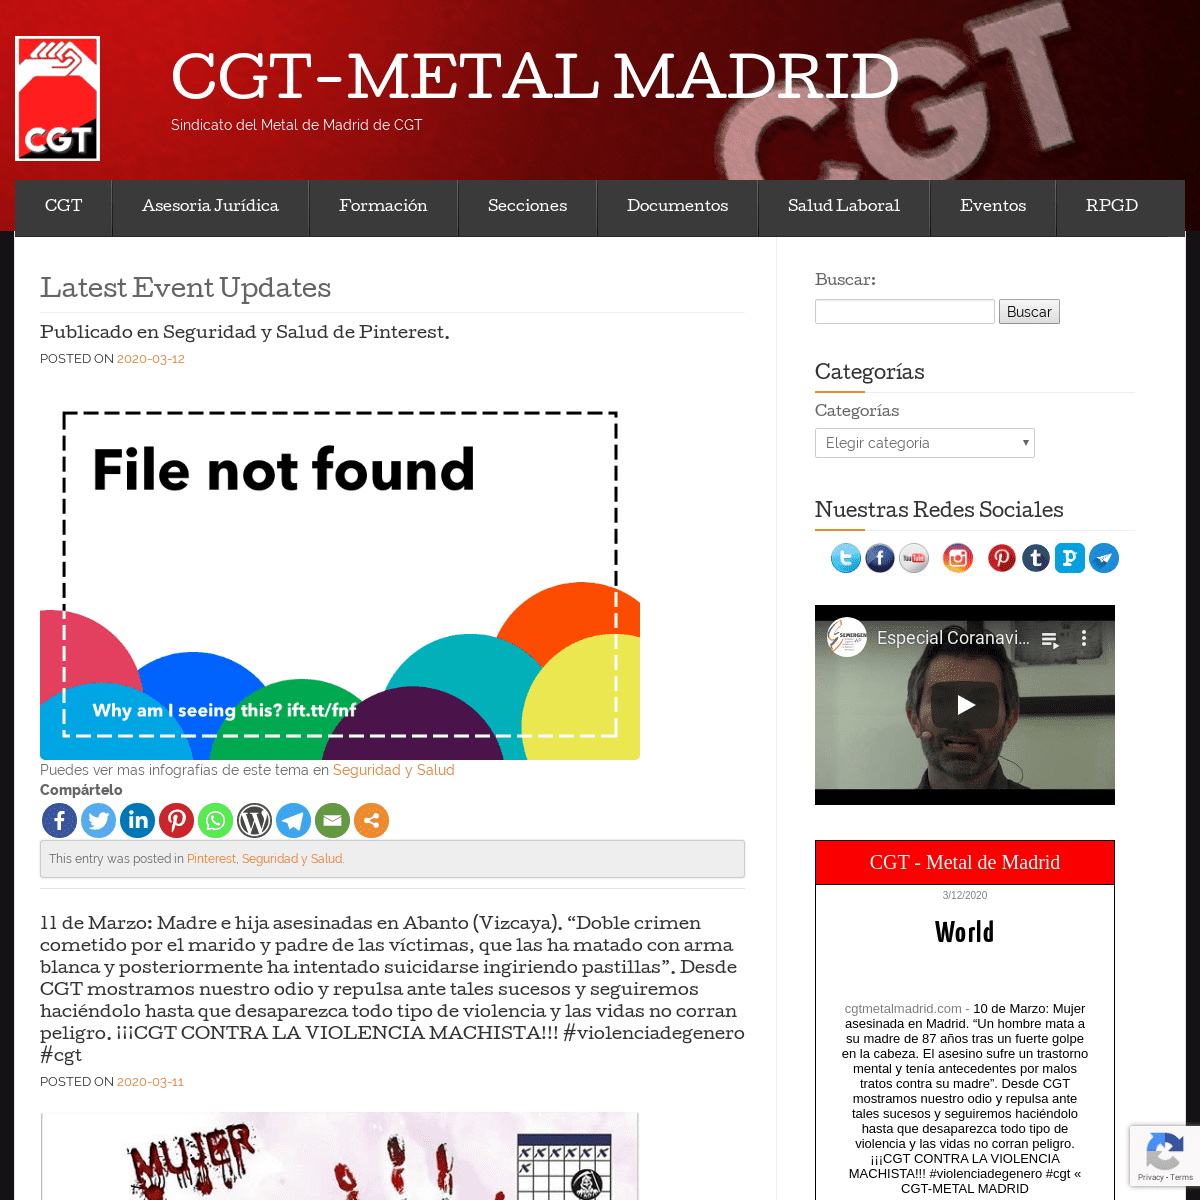 A complete backup of cgtmetalmadrid.com